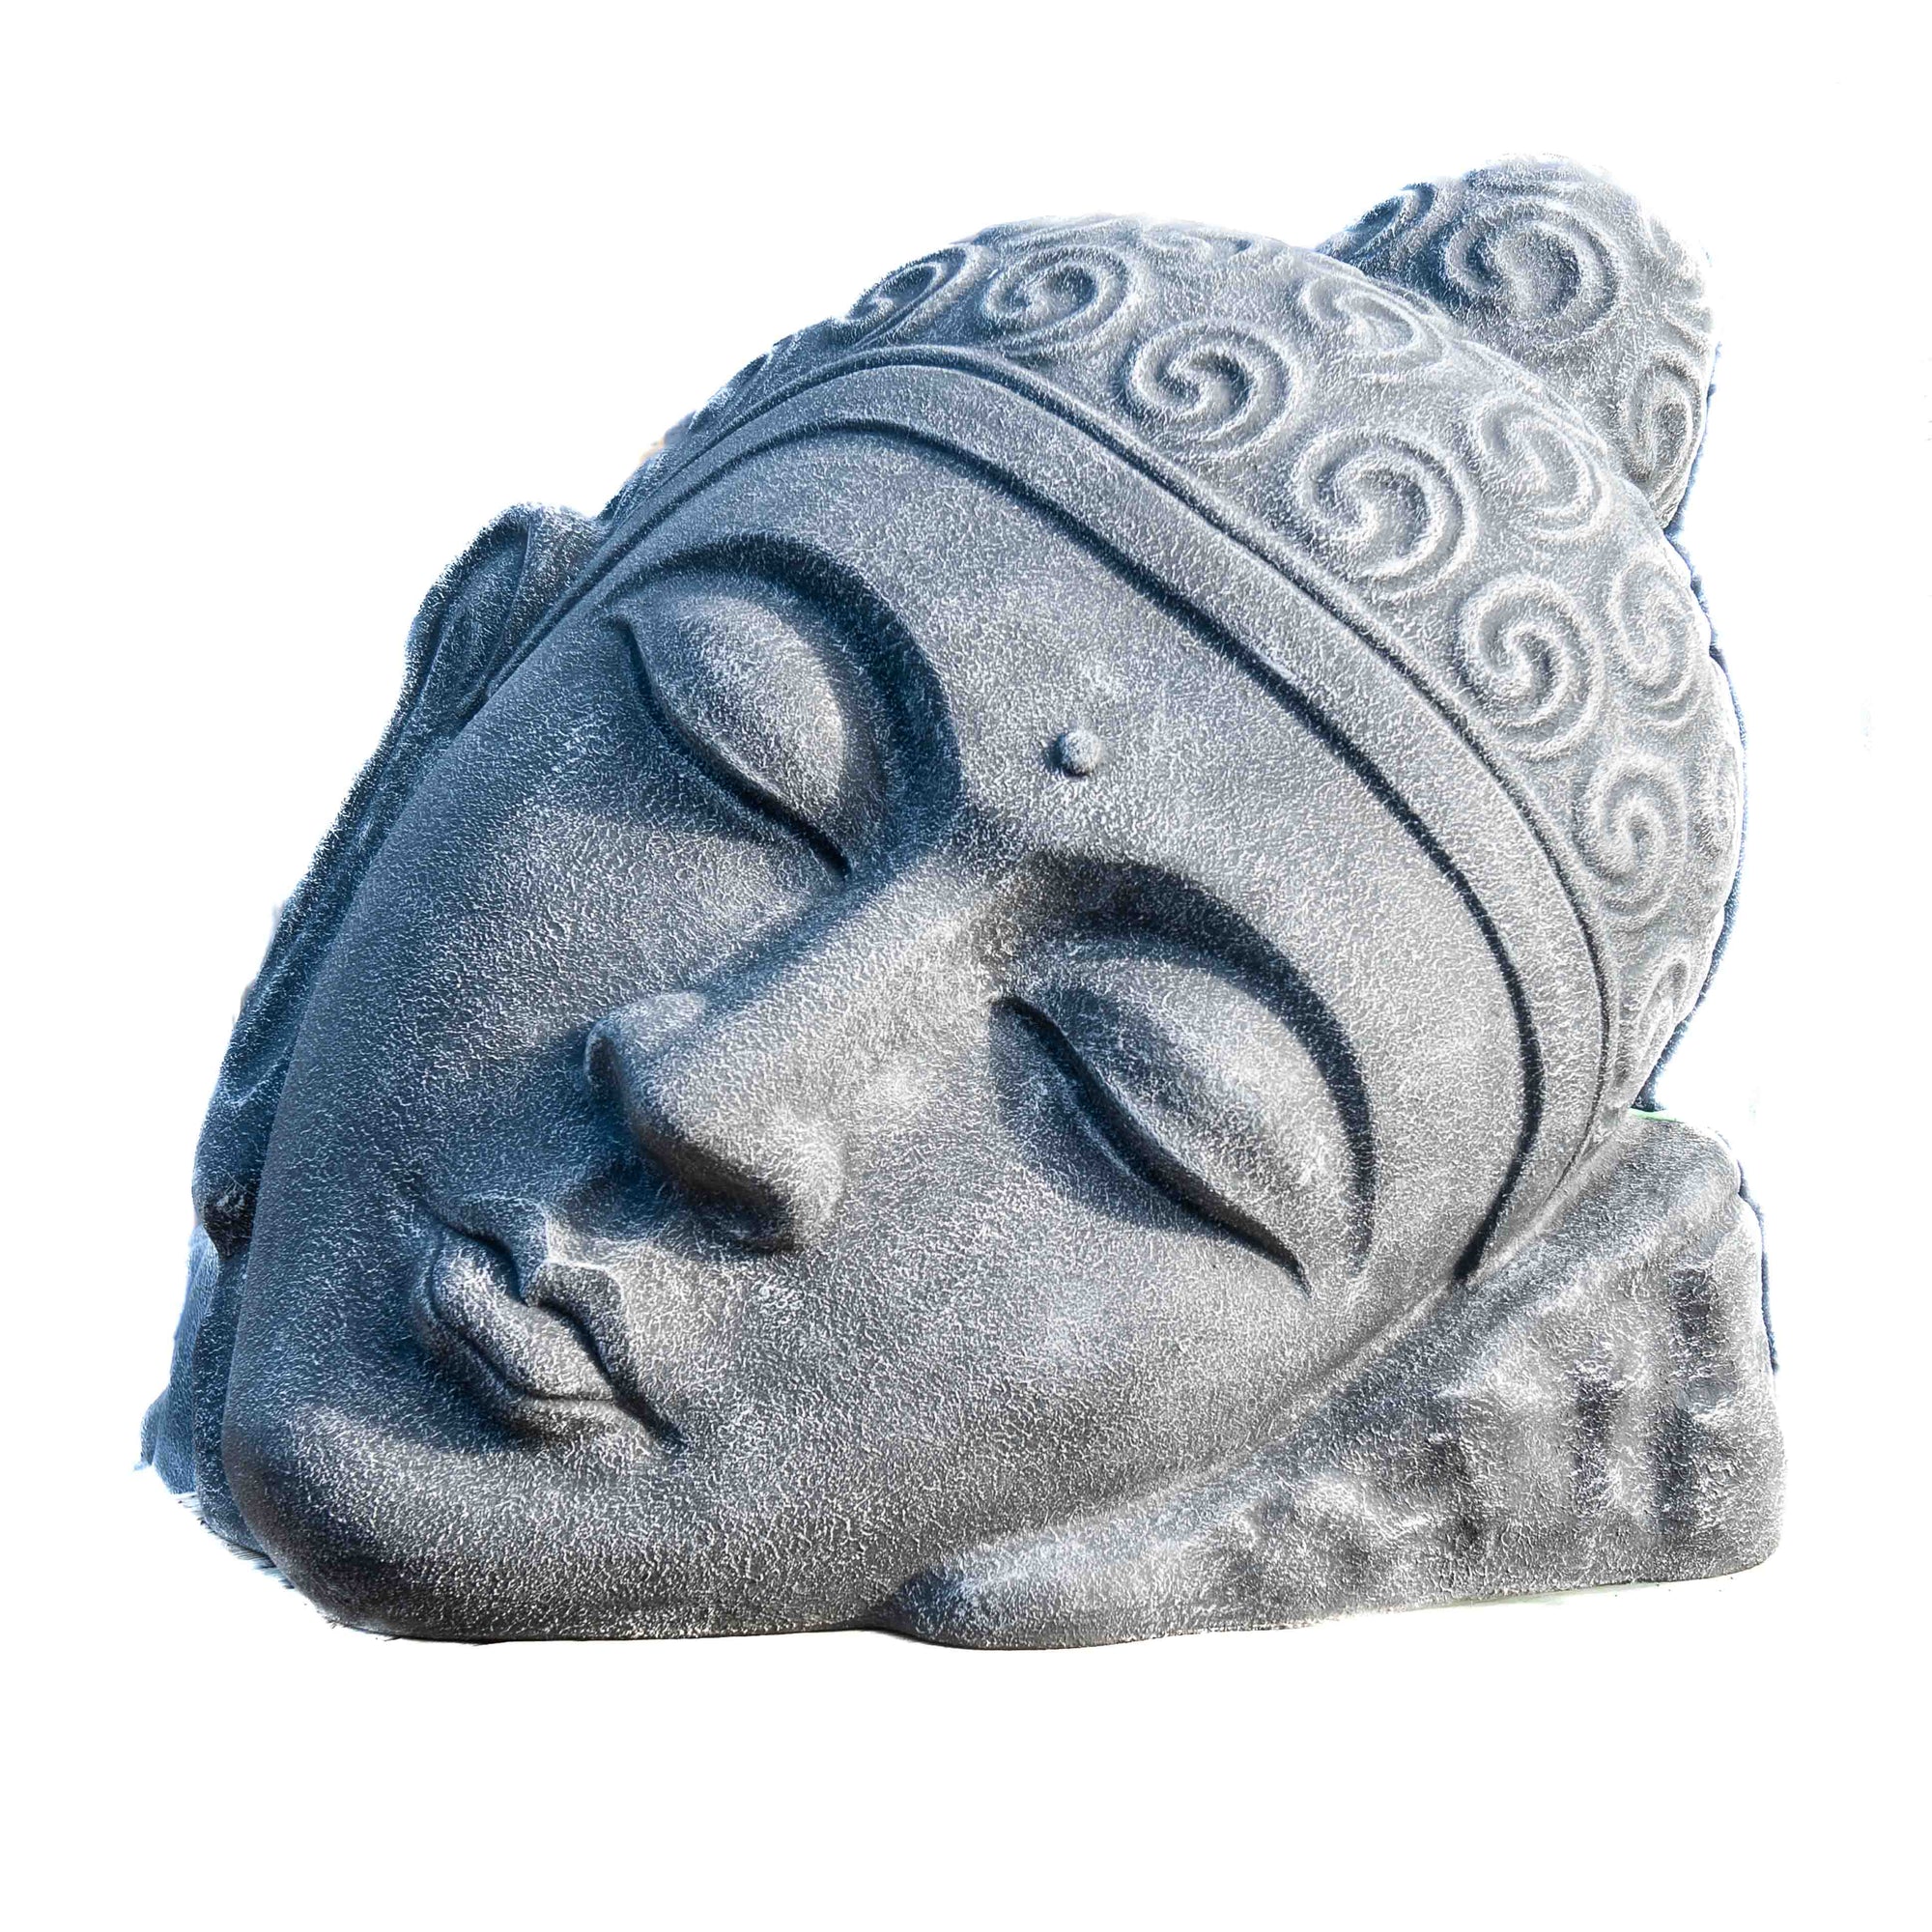 Terrazzo Dreaming Buddha Head